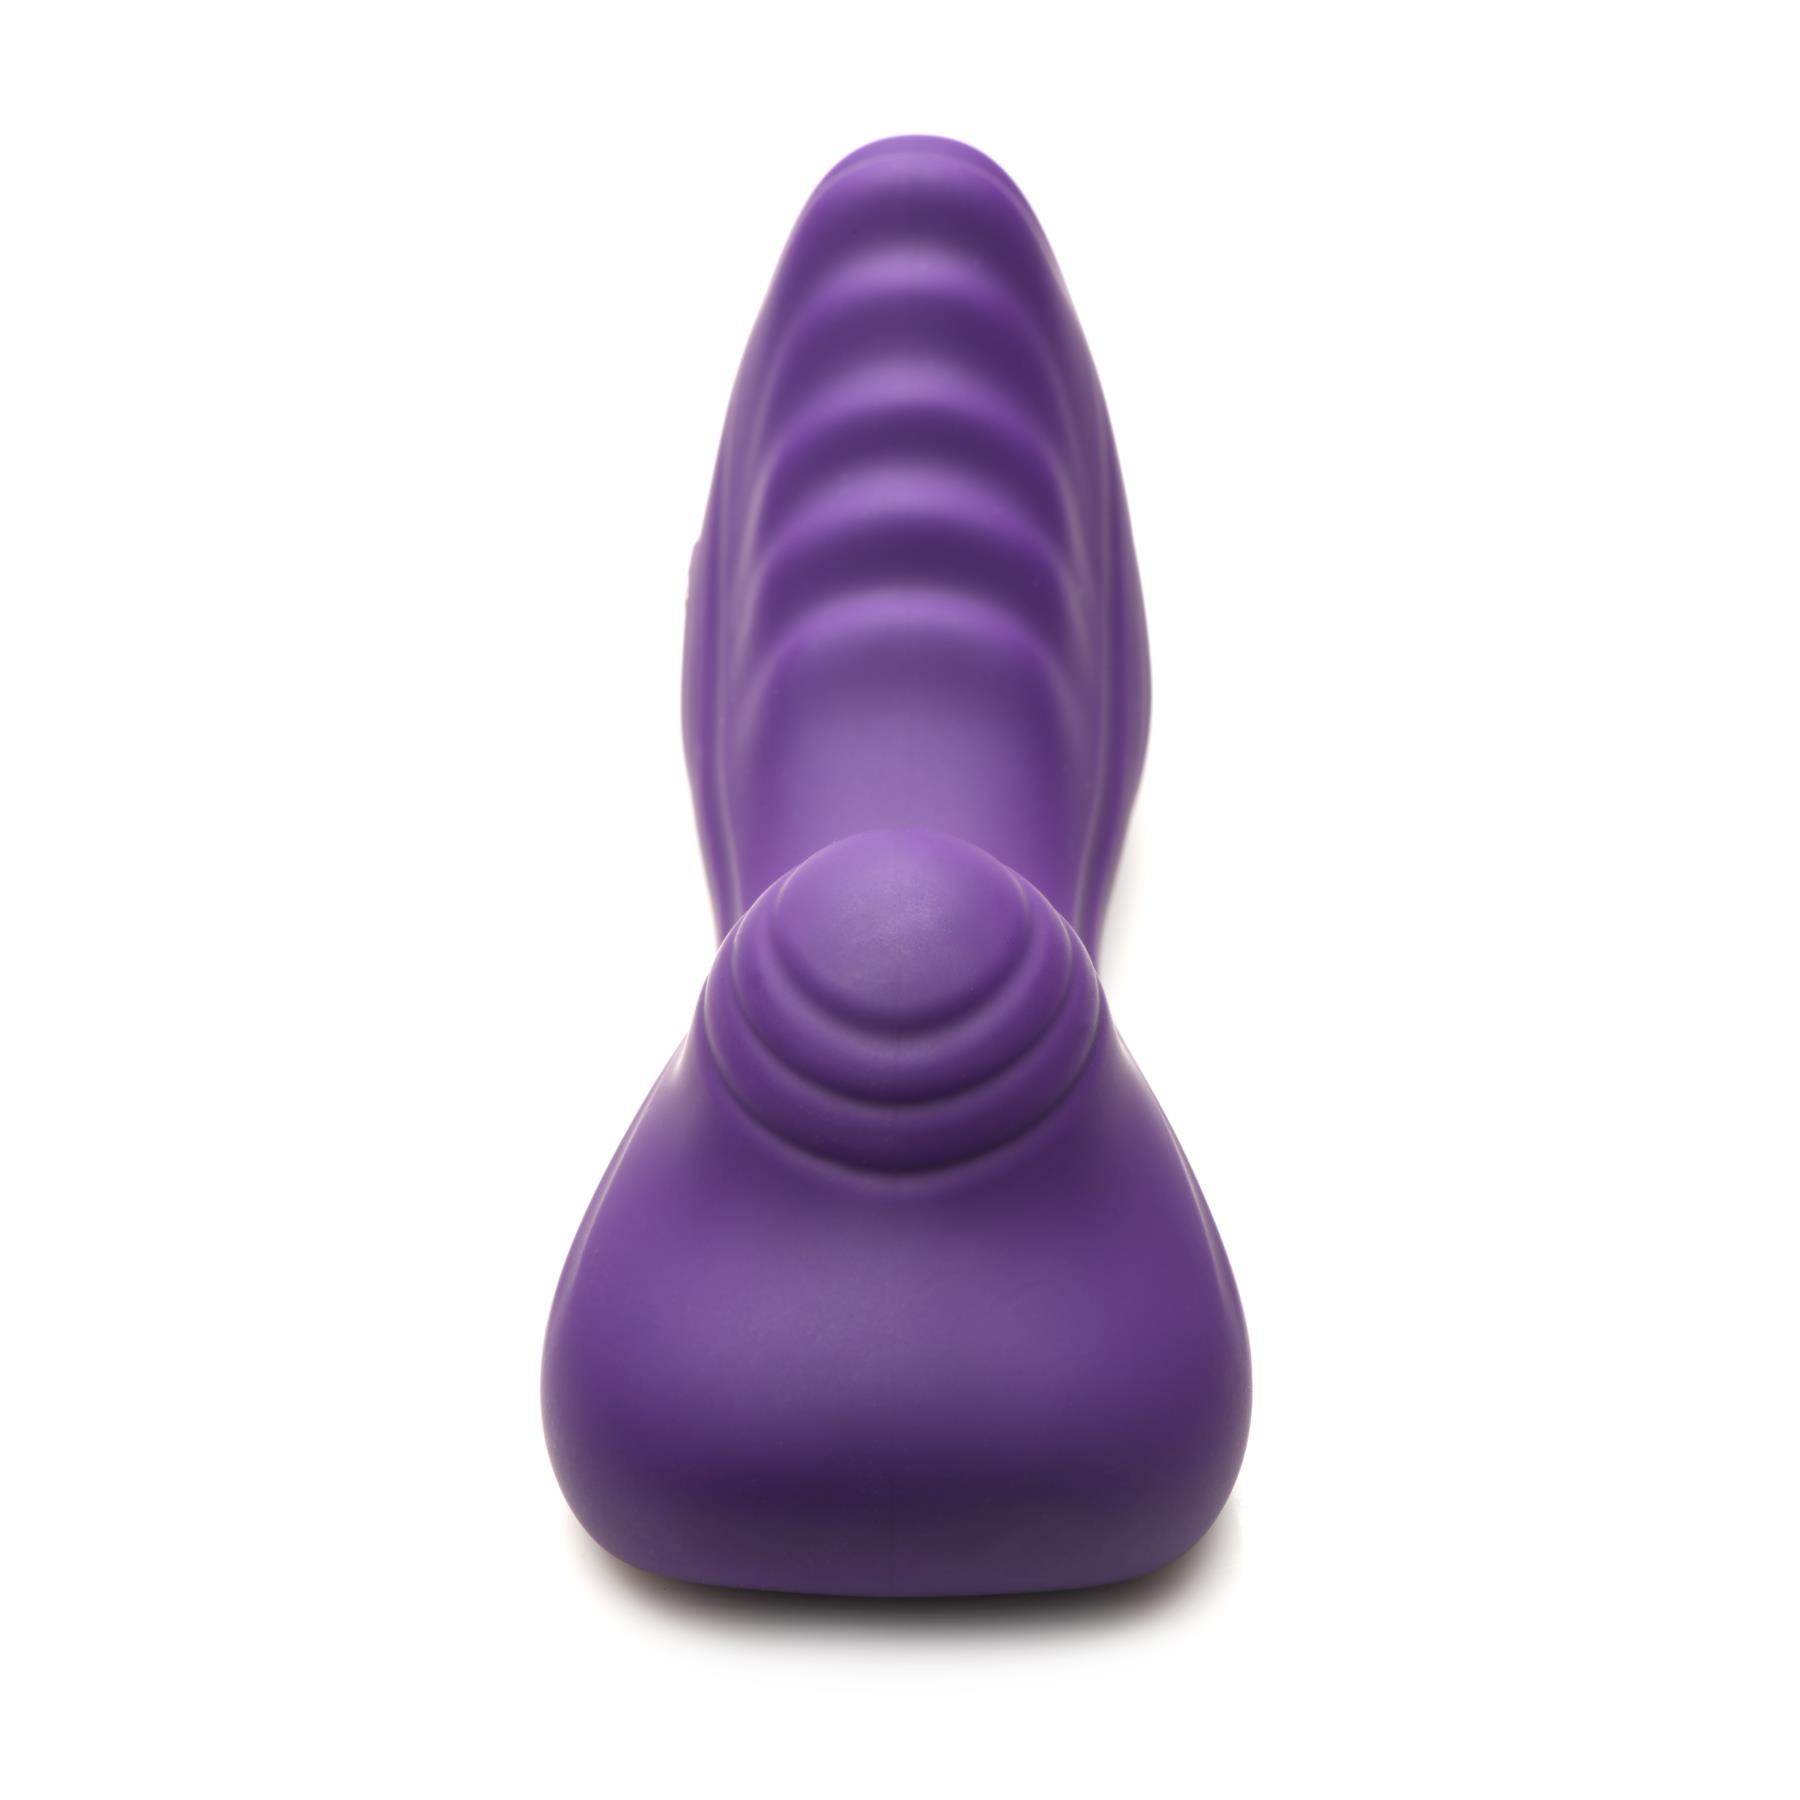 INMI Ride N' Grind Vibrating Sex Grinder - Product